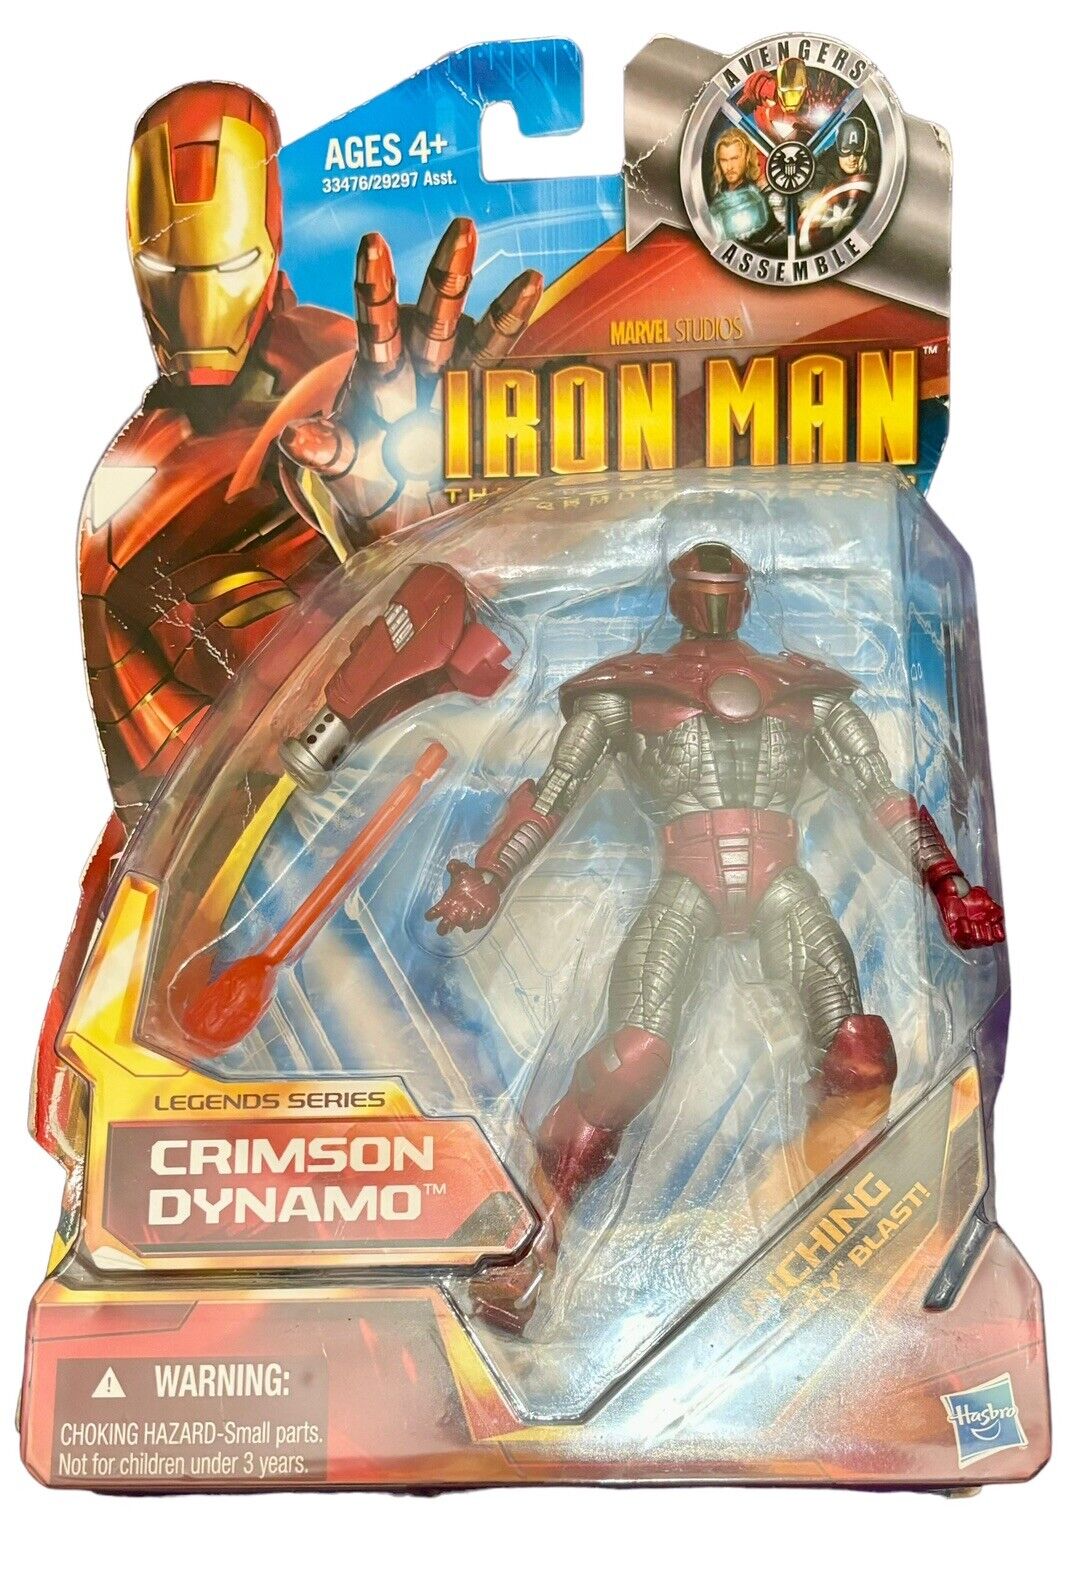 Hasbro Marvel Studios Iron Man Armored Avenger Legends Crimson Dynamo Figure